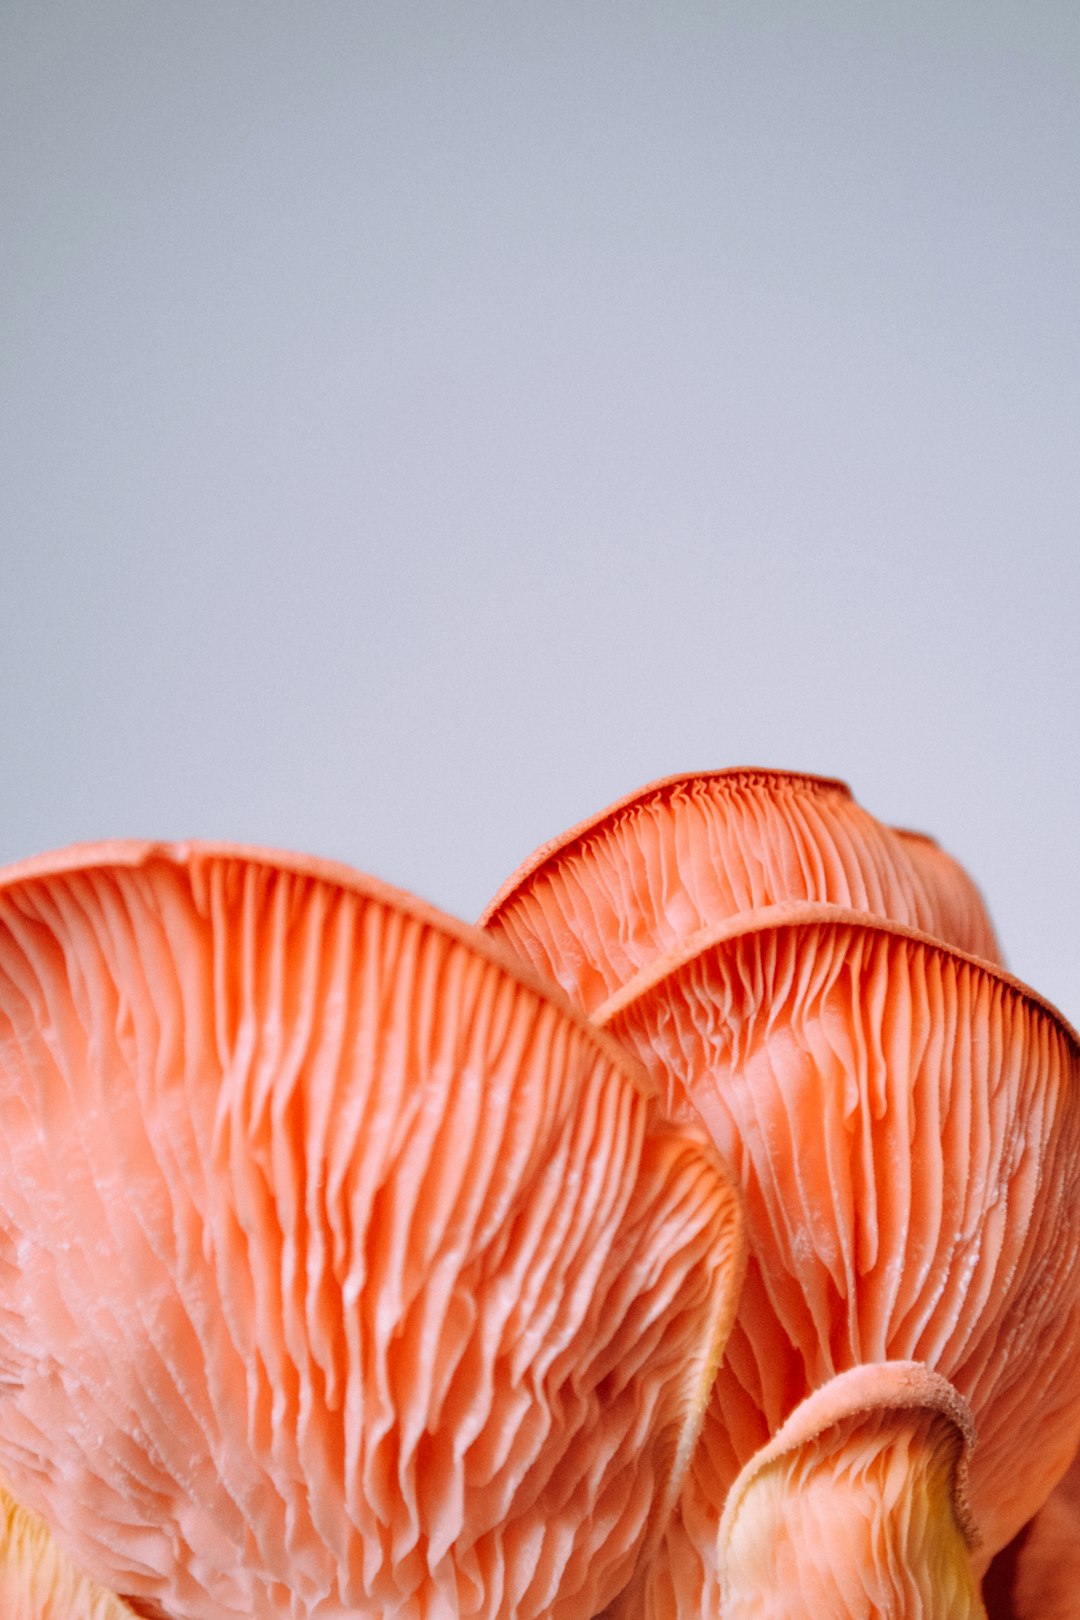 mushrooms types, Shiitake Mushrooms, pink mushrooms